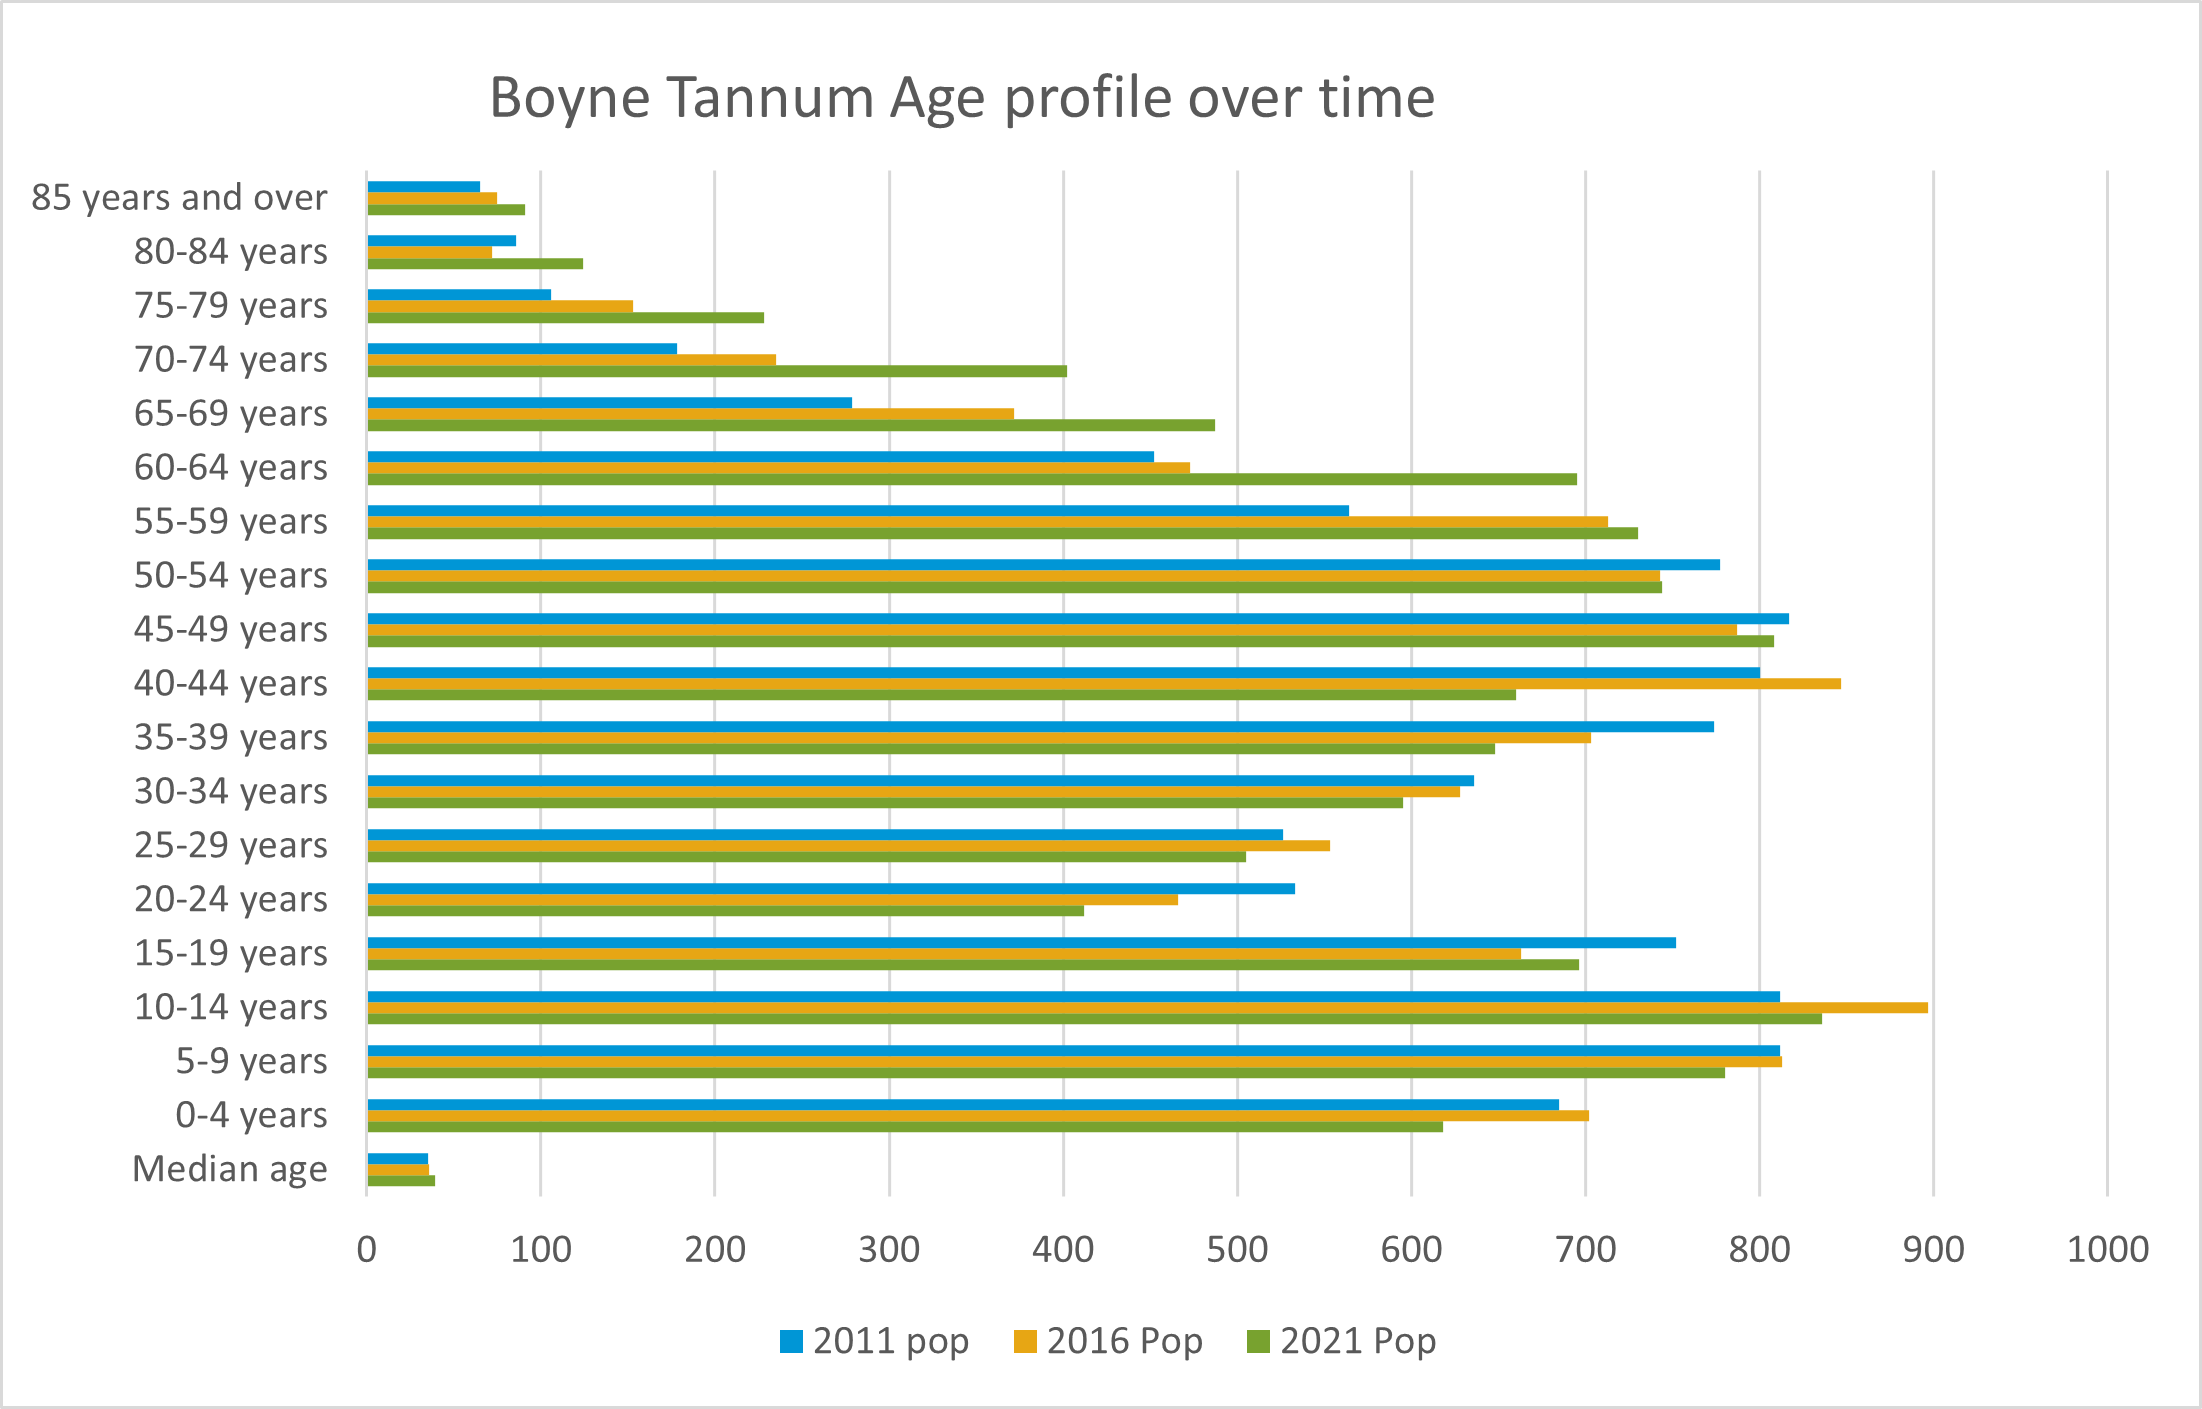 Boyne tannum age profile over time